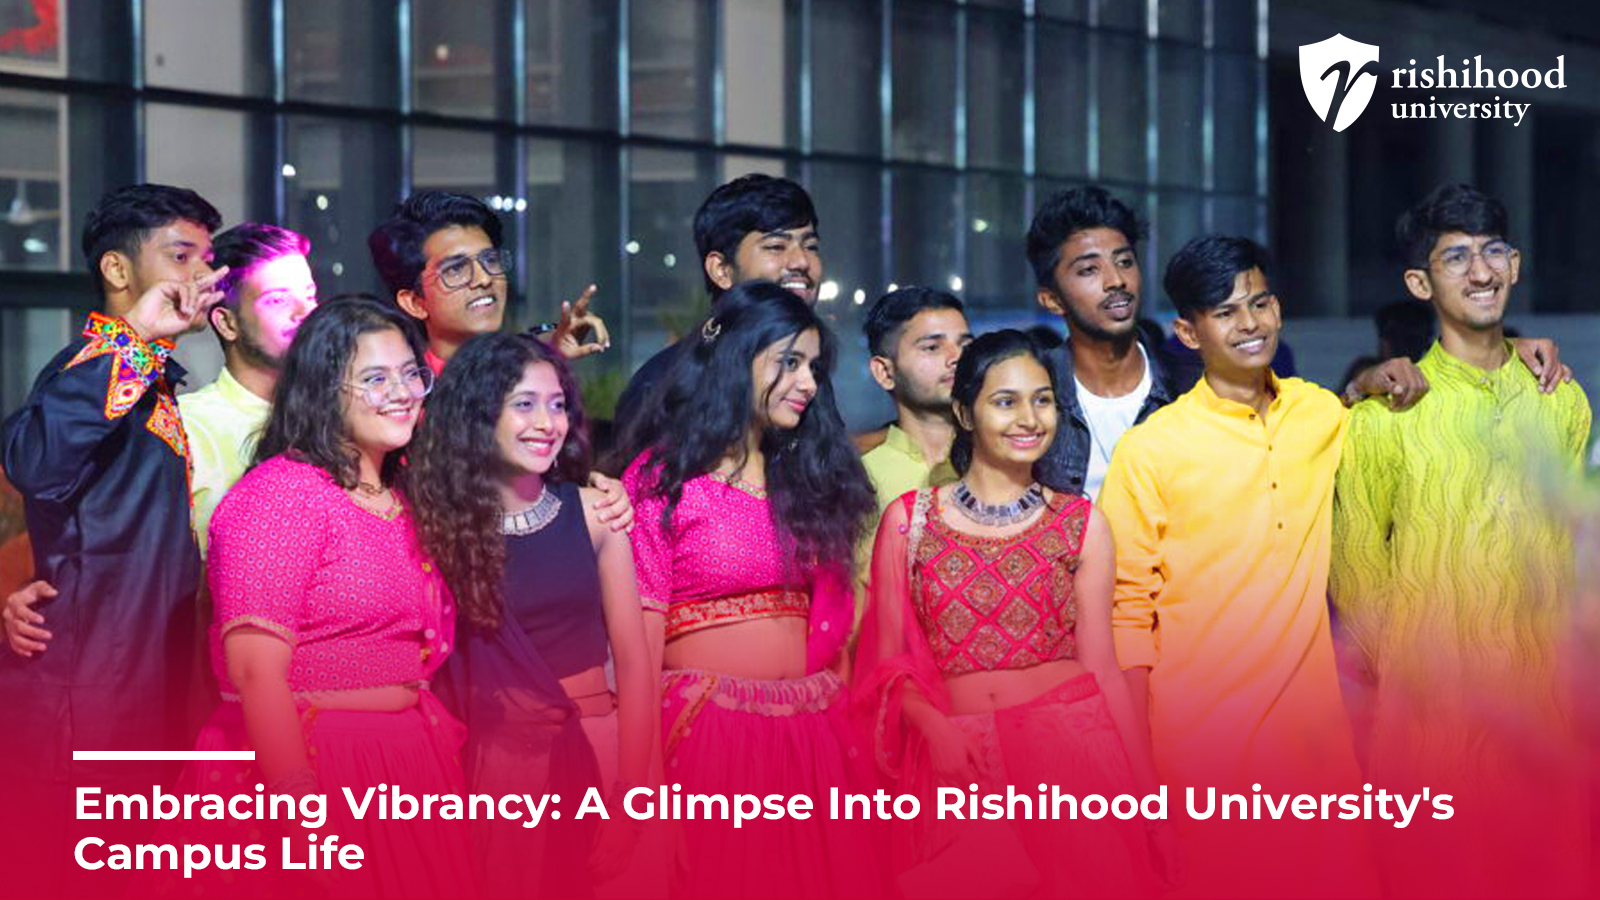 Rishihood University's Campus Life